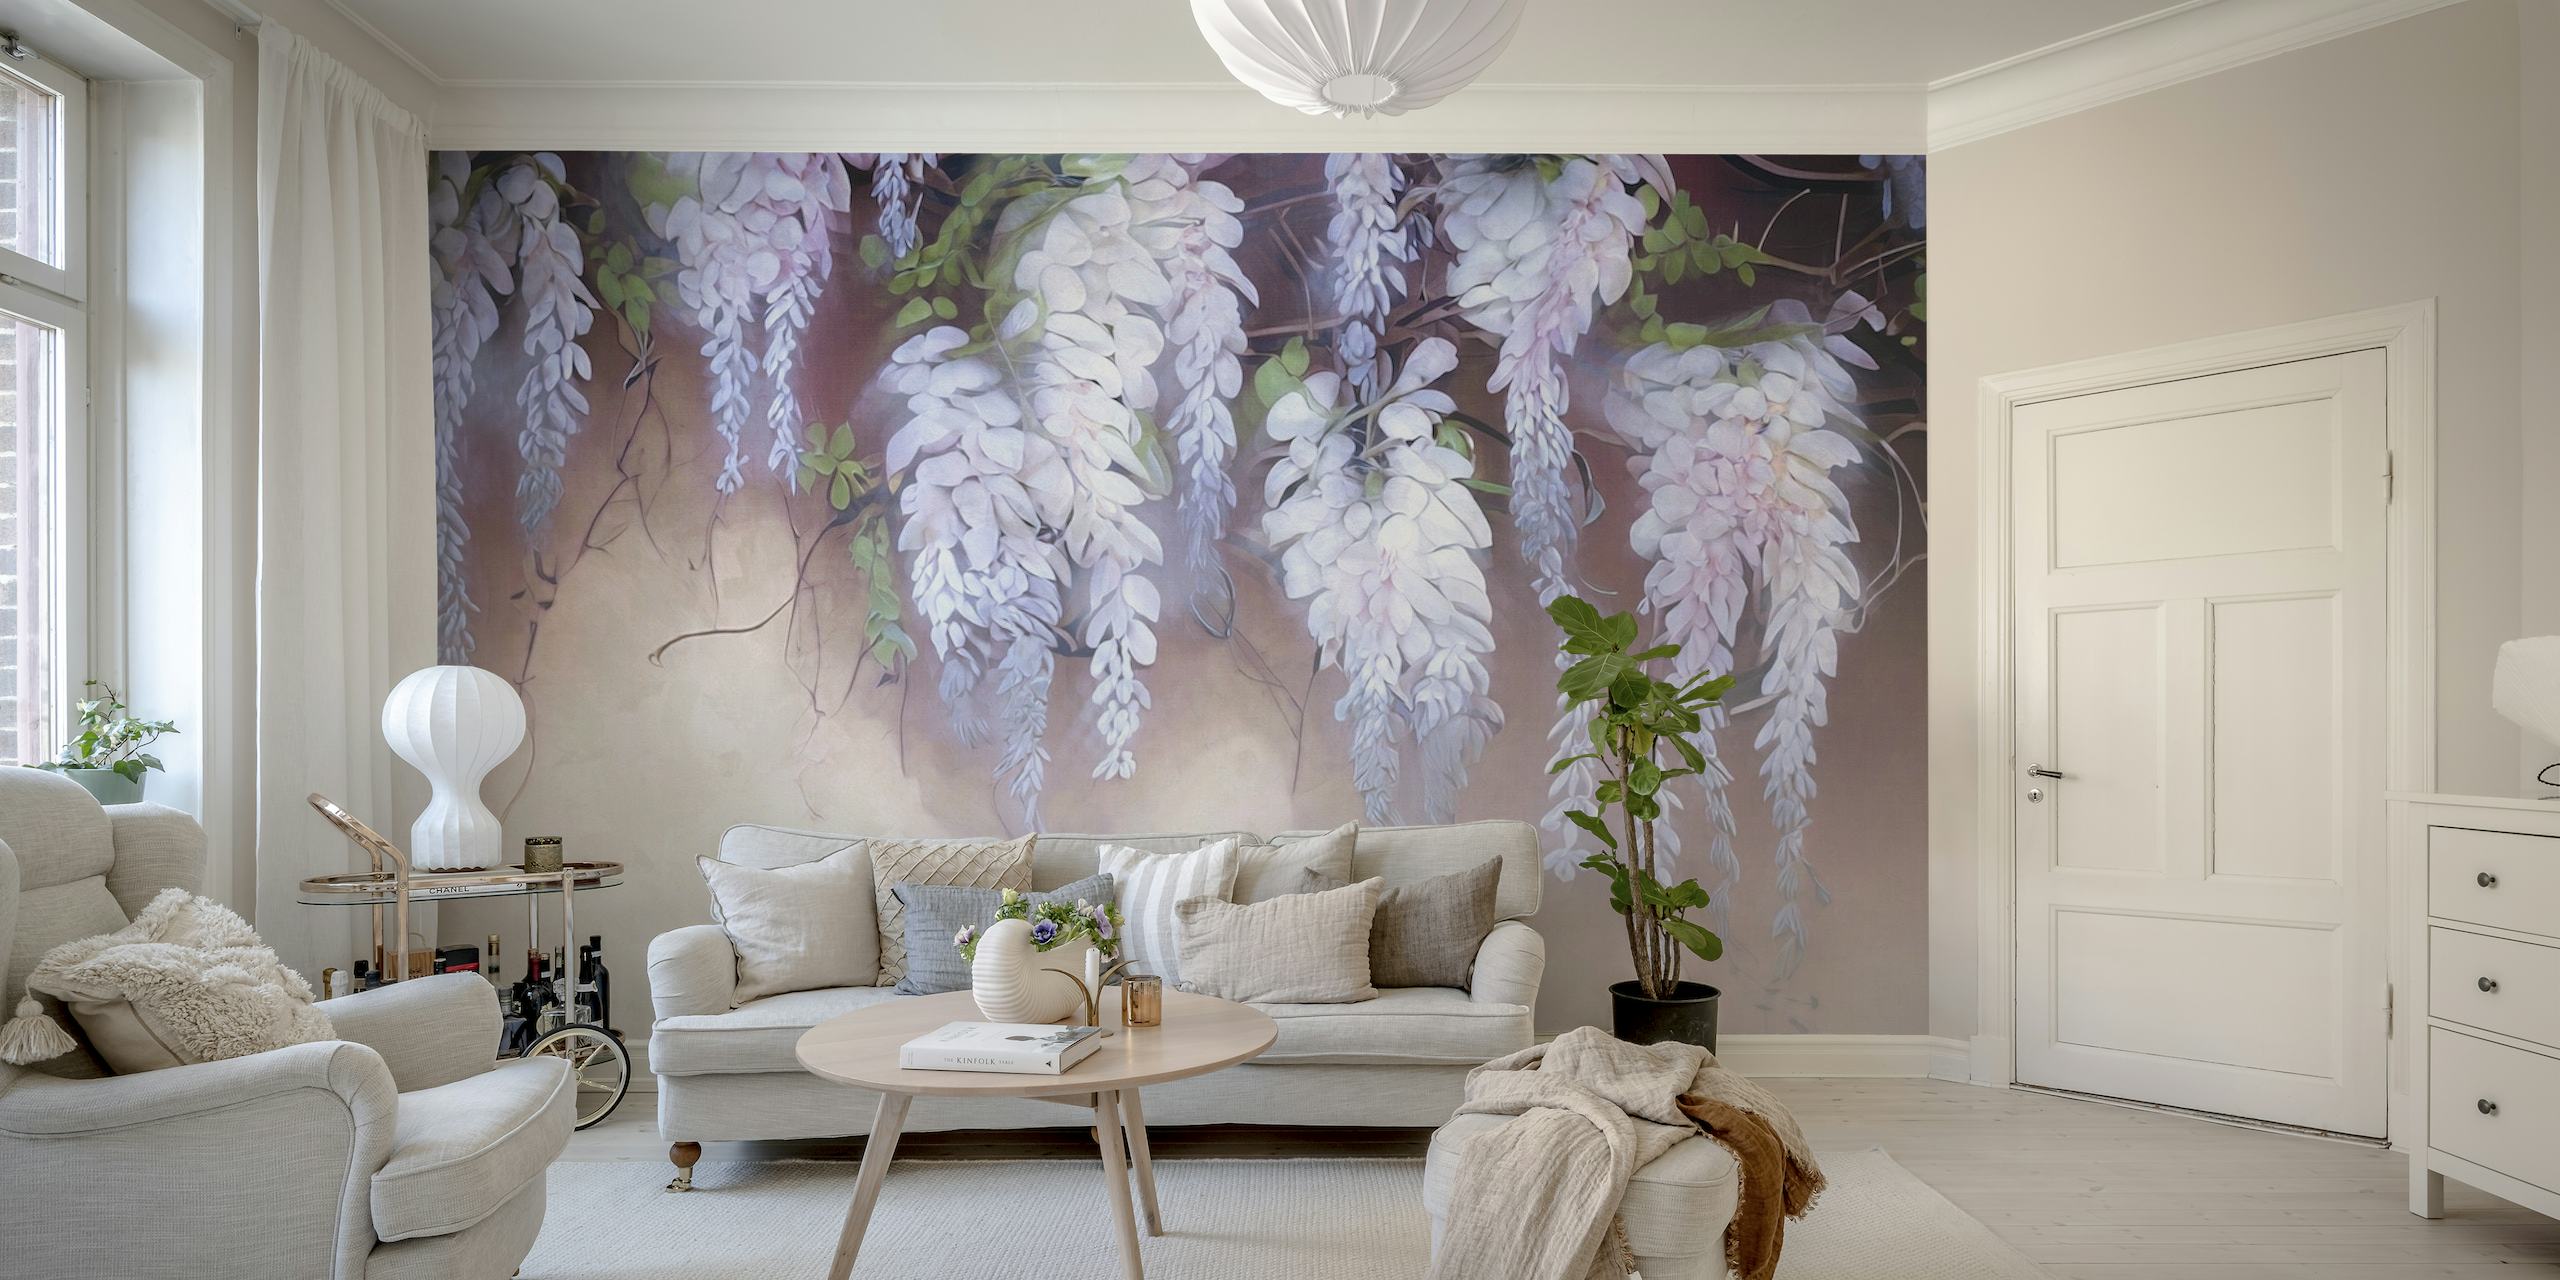 Floral wisteria wall papel pintado